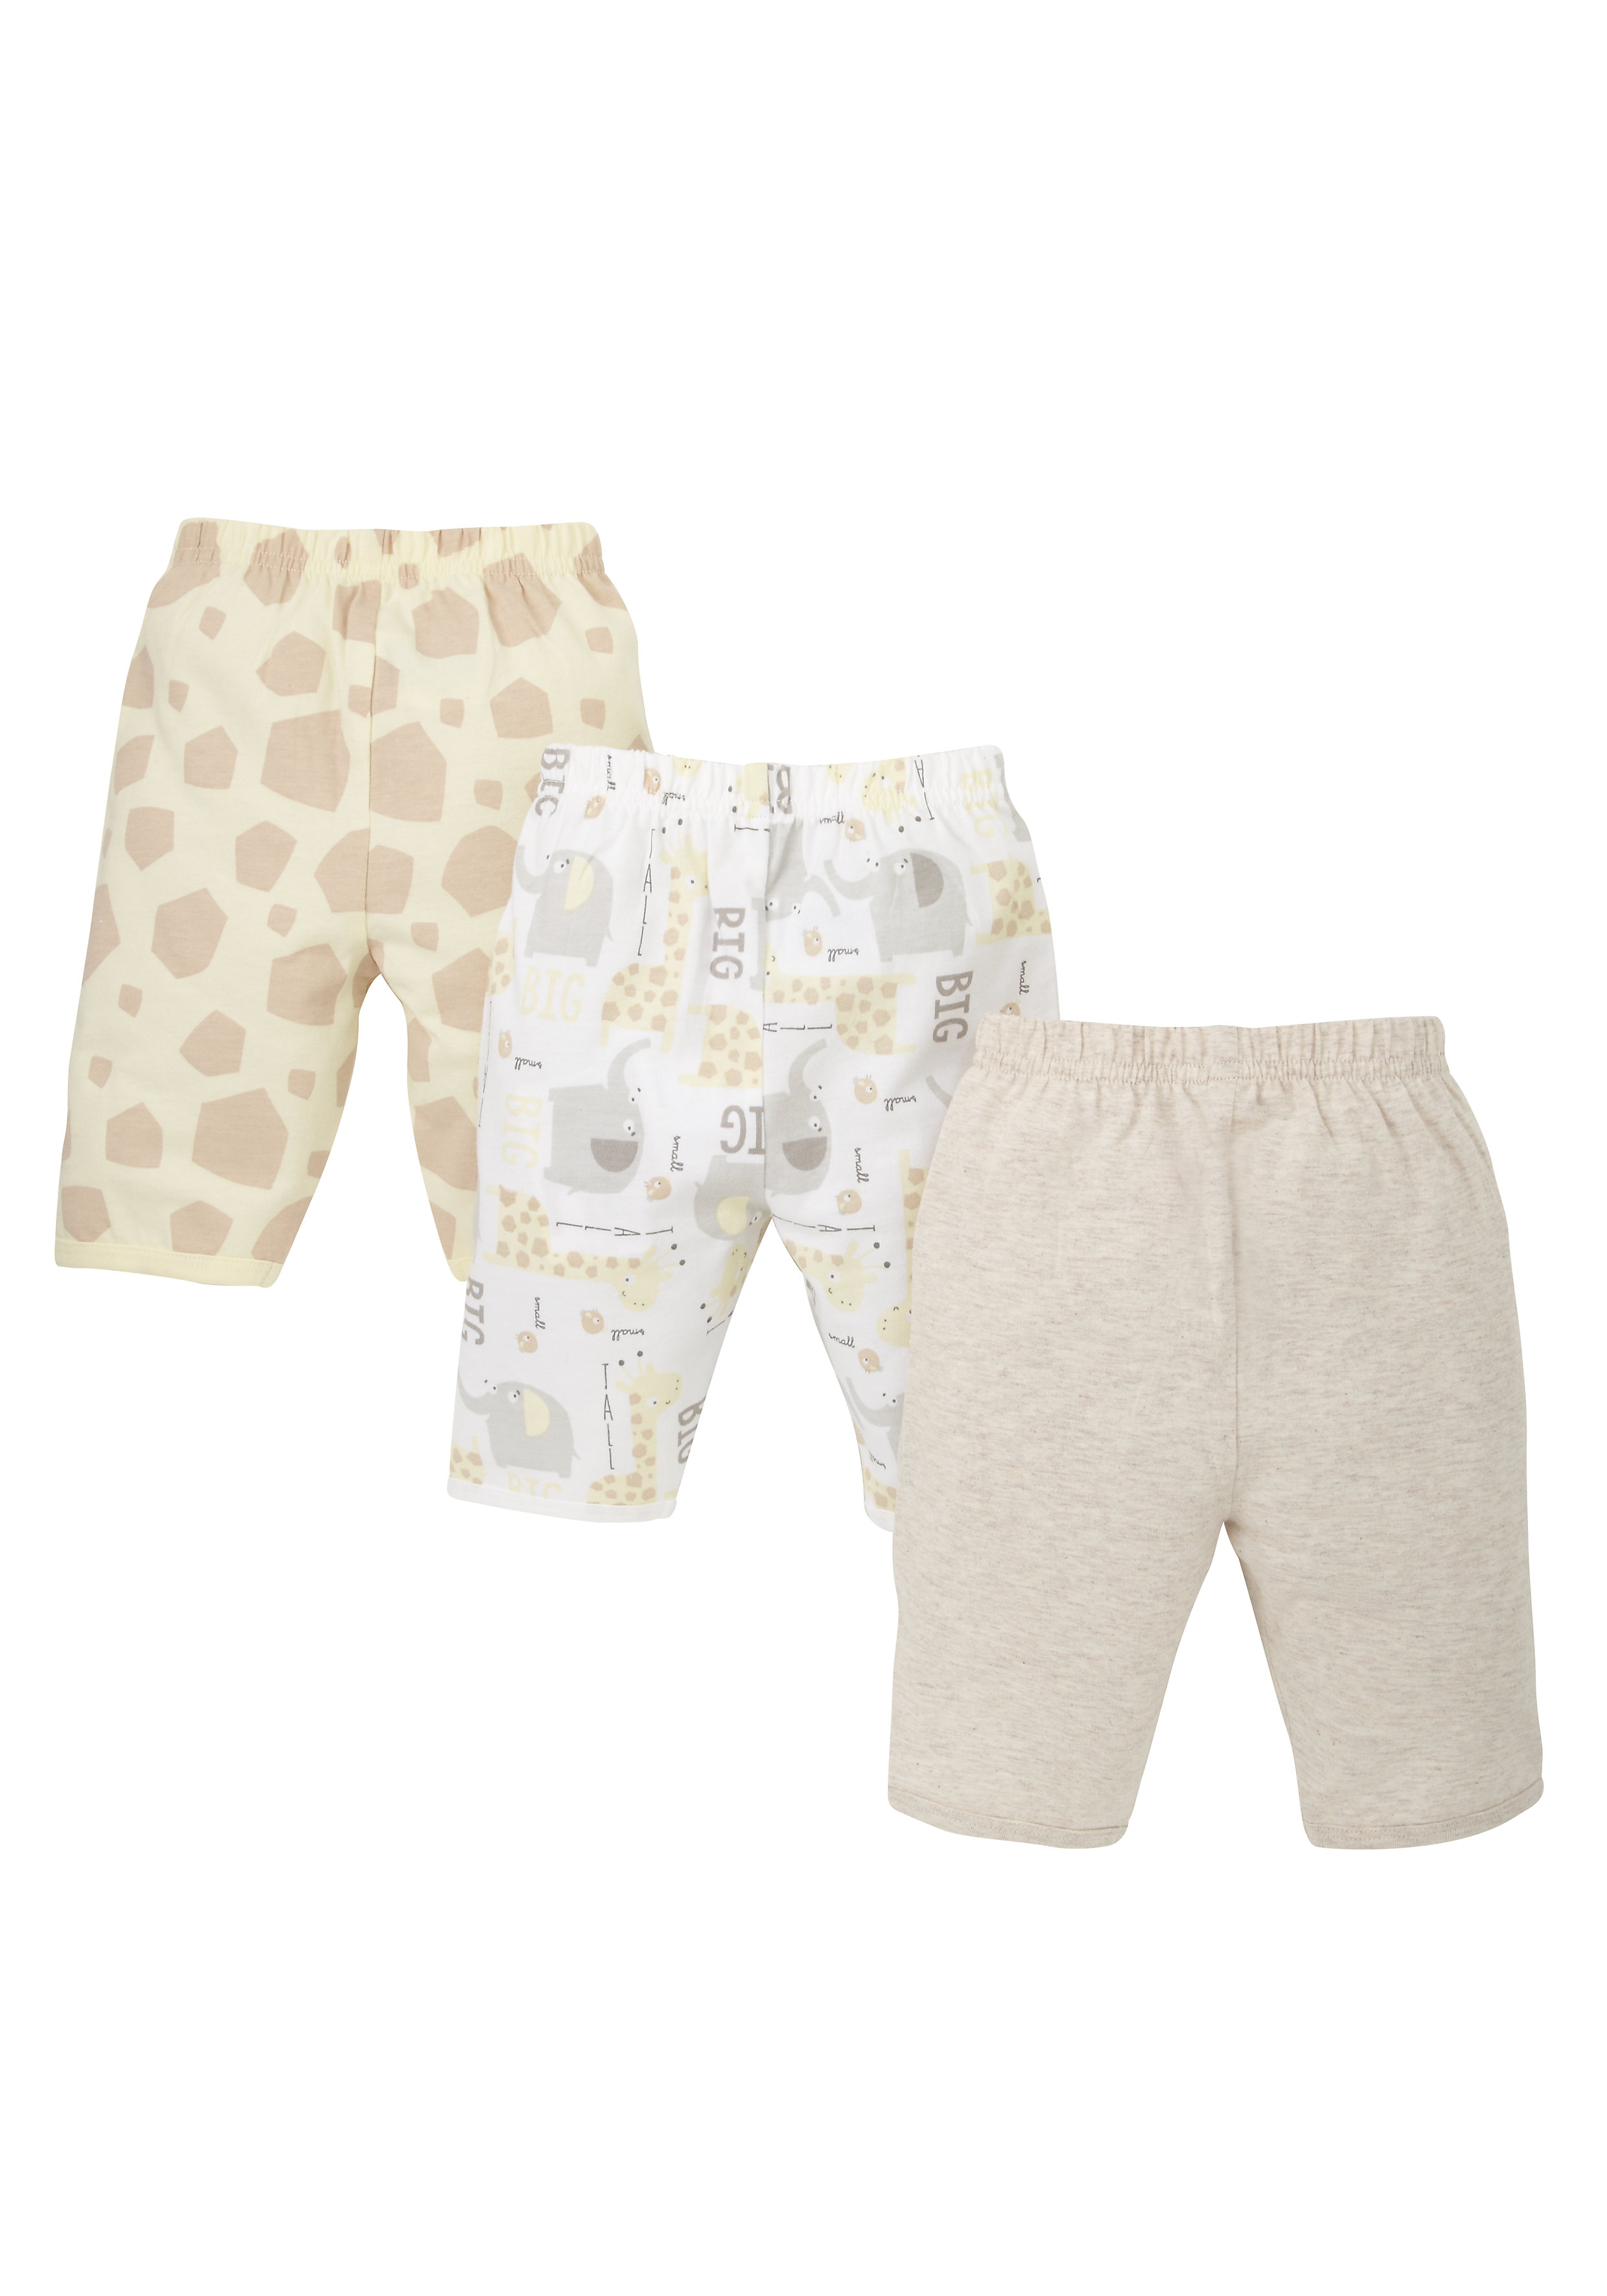 Mothercare | Unisex Pyjama Bottom Set - Pack of 3 - Multicolor 1